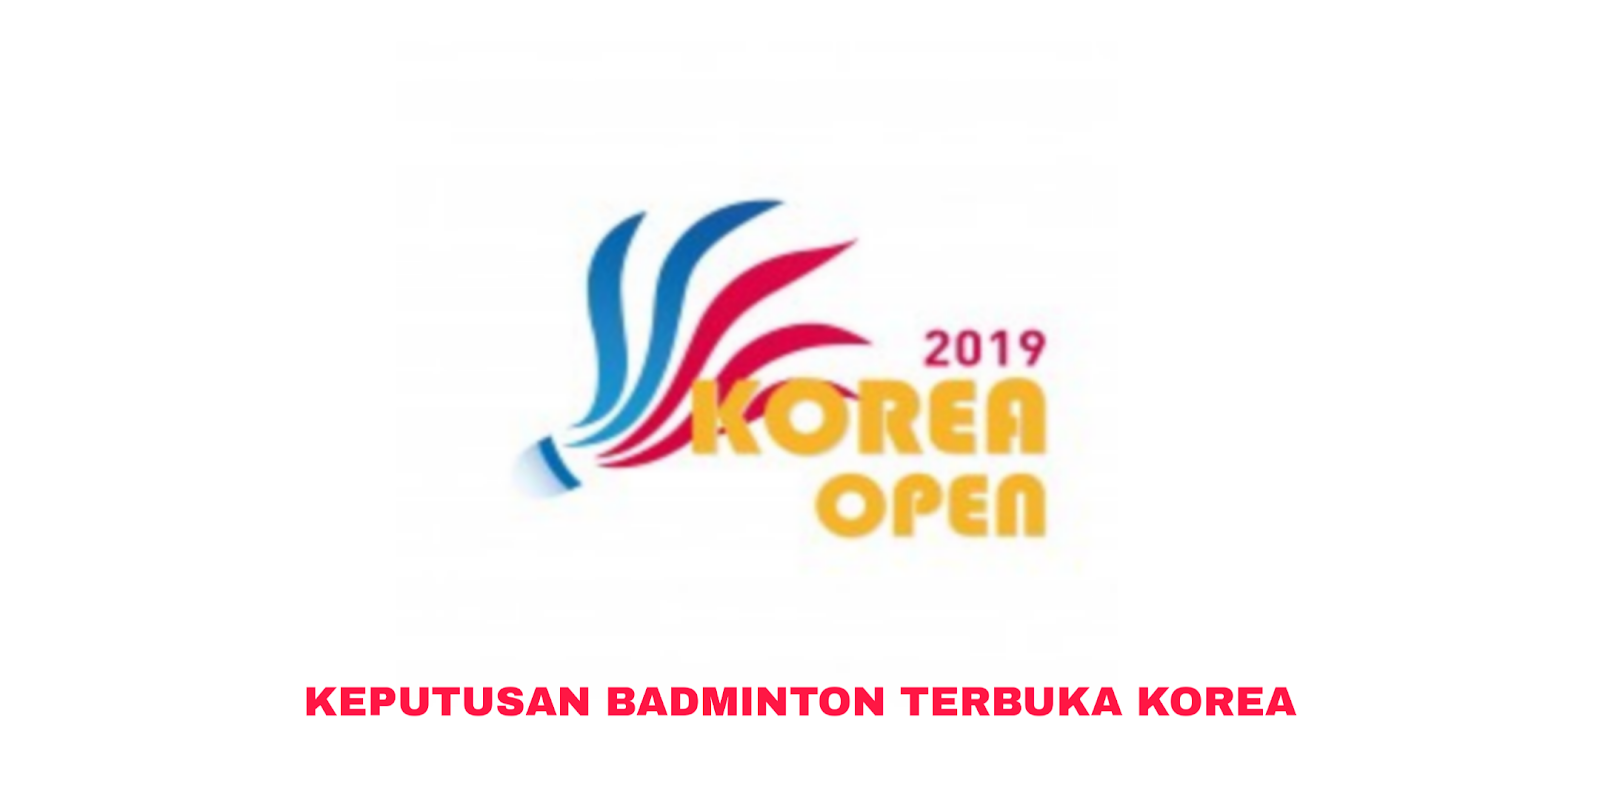 Keputusan Badminton Terbuka Korea 2019 (Jadual)